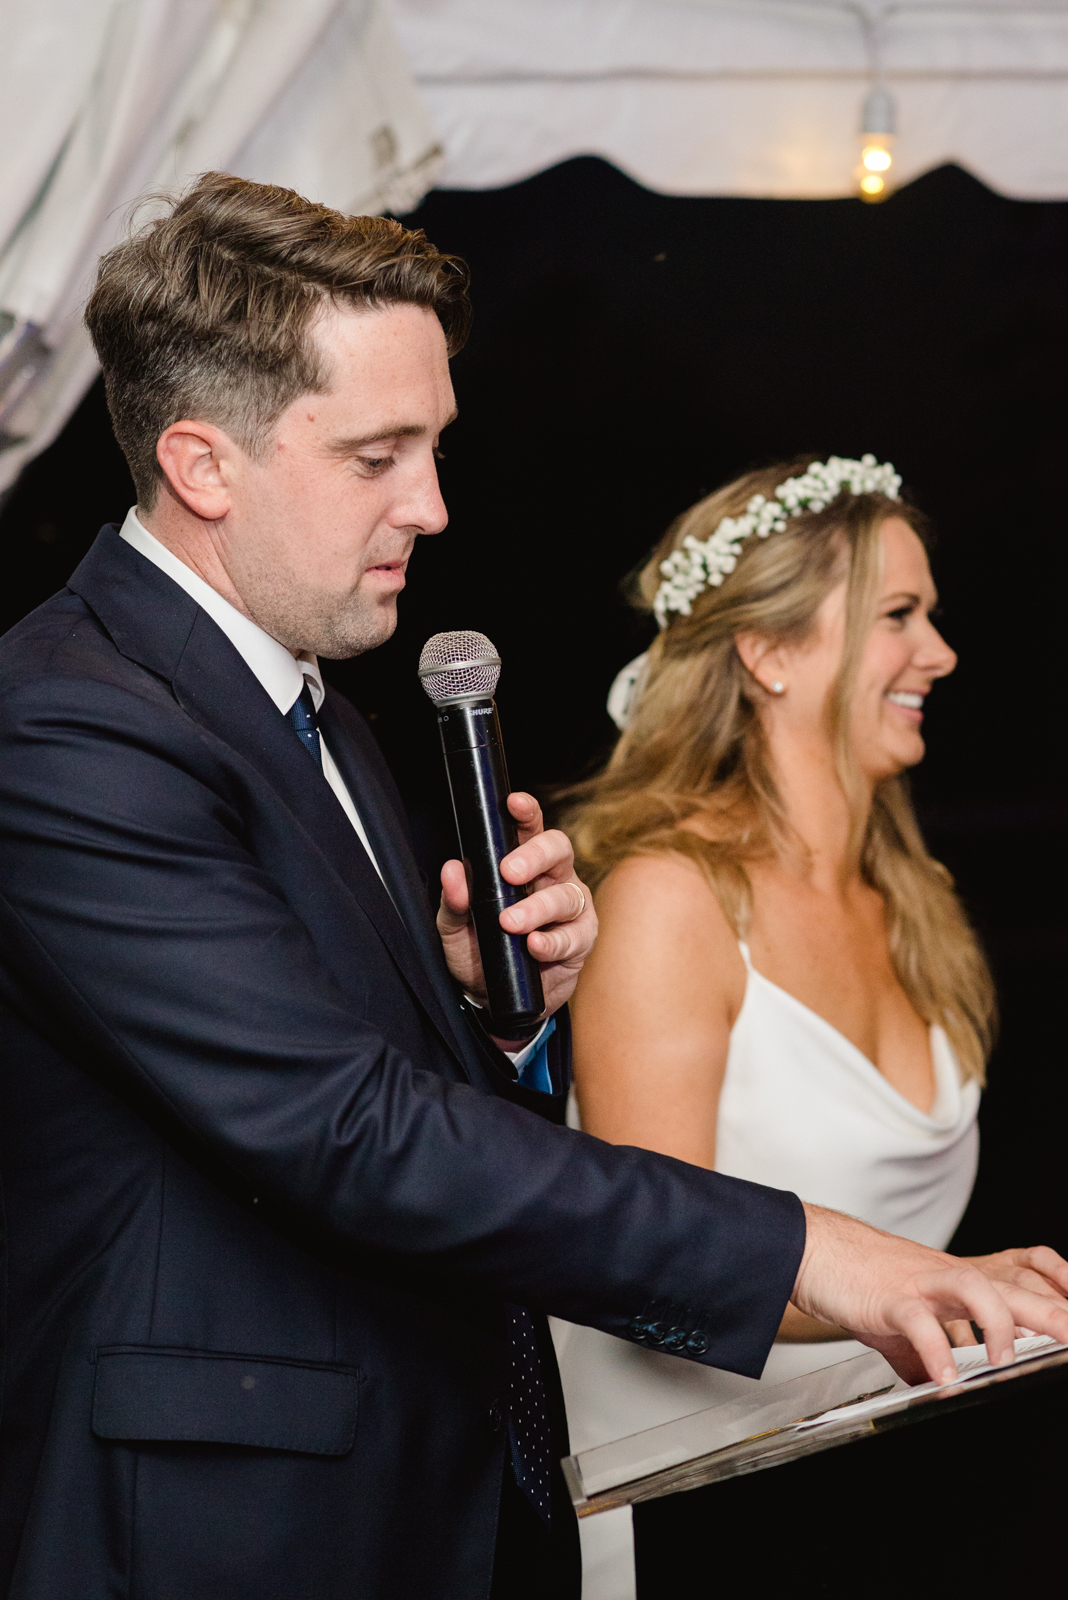 groom giving speech during wedding reception